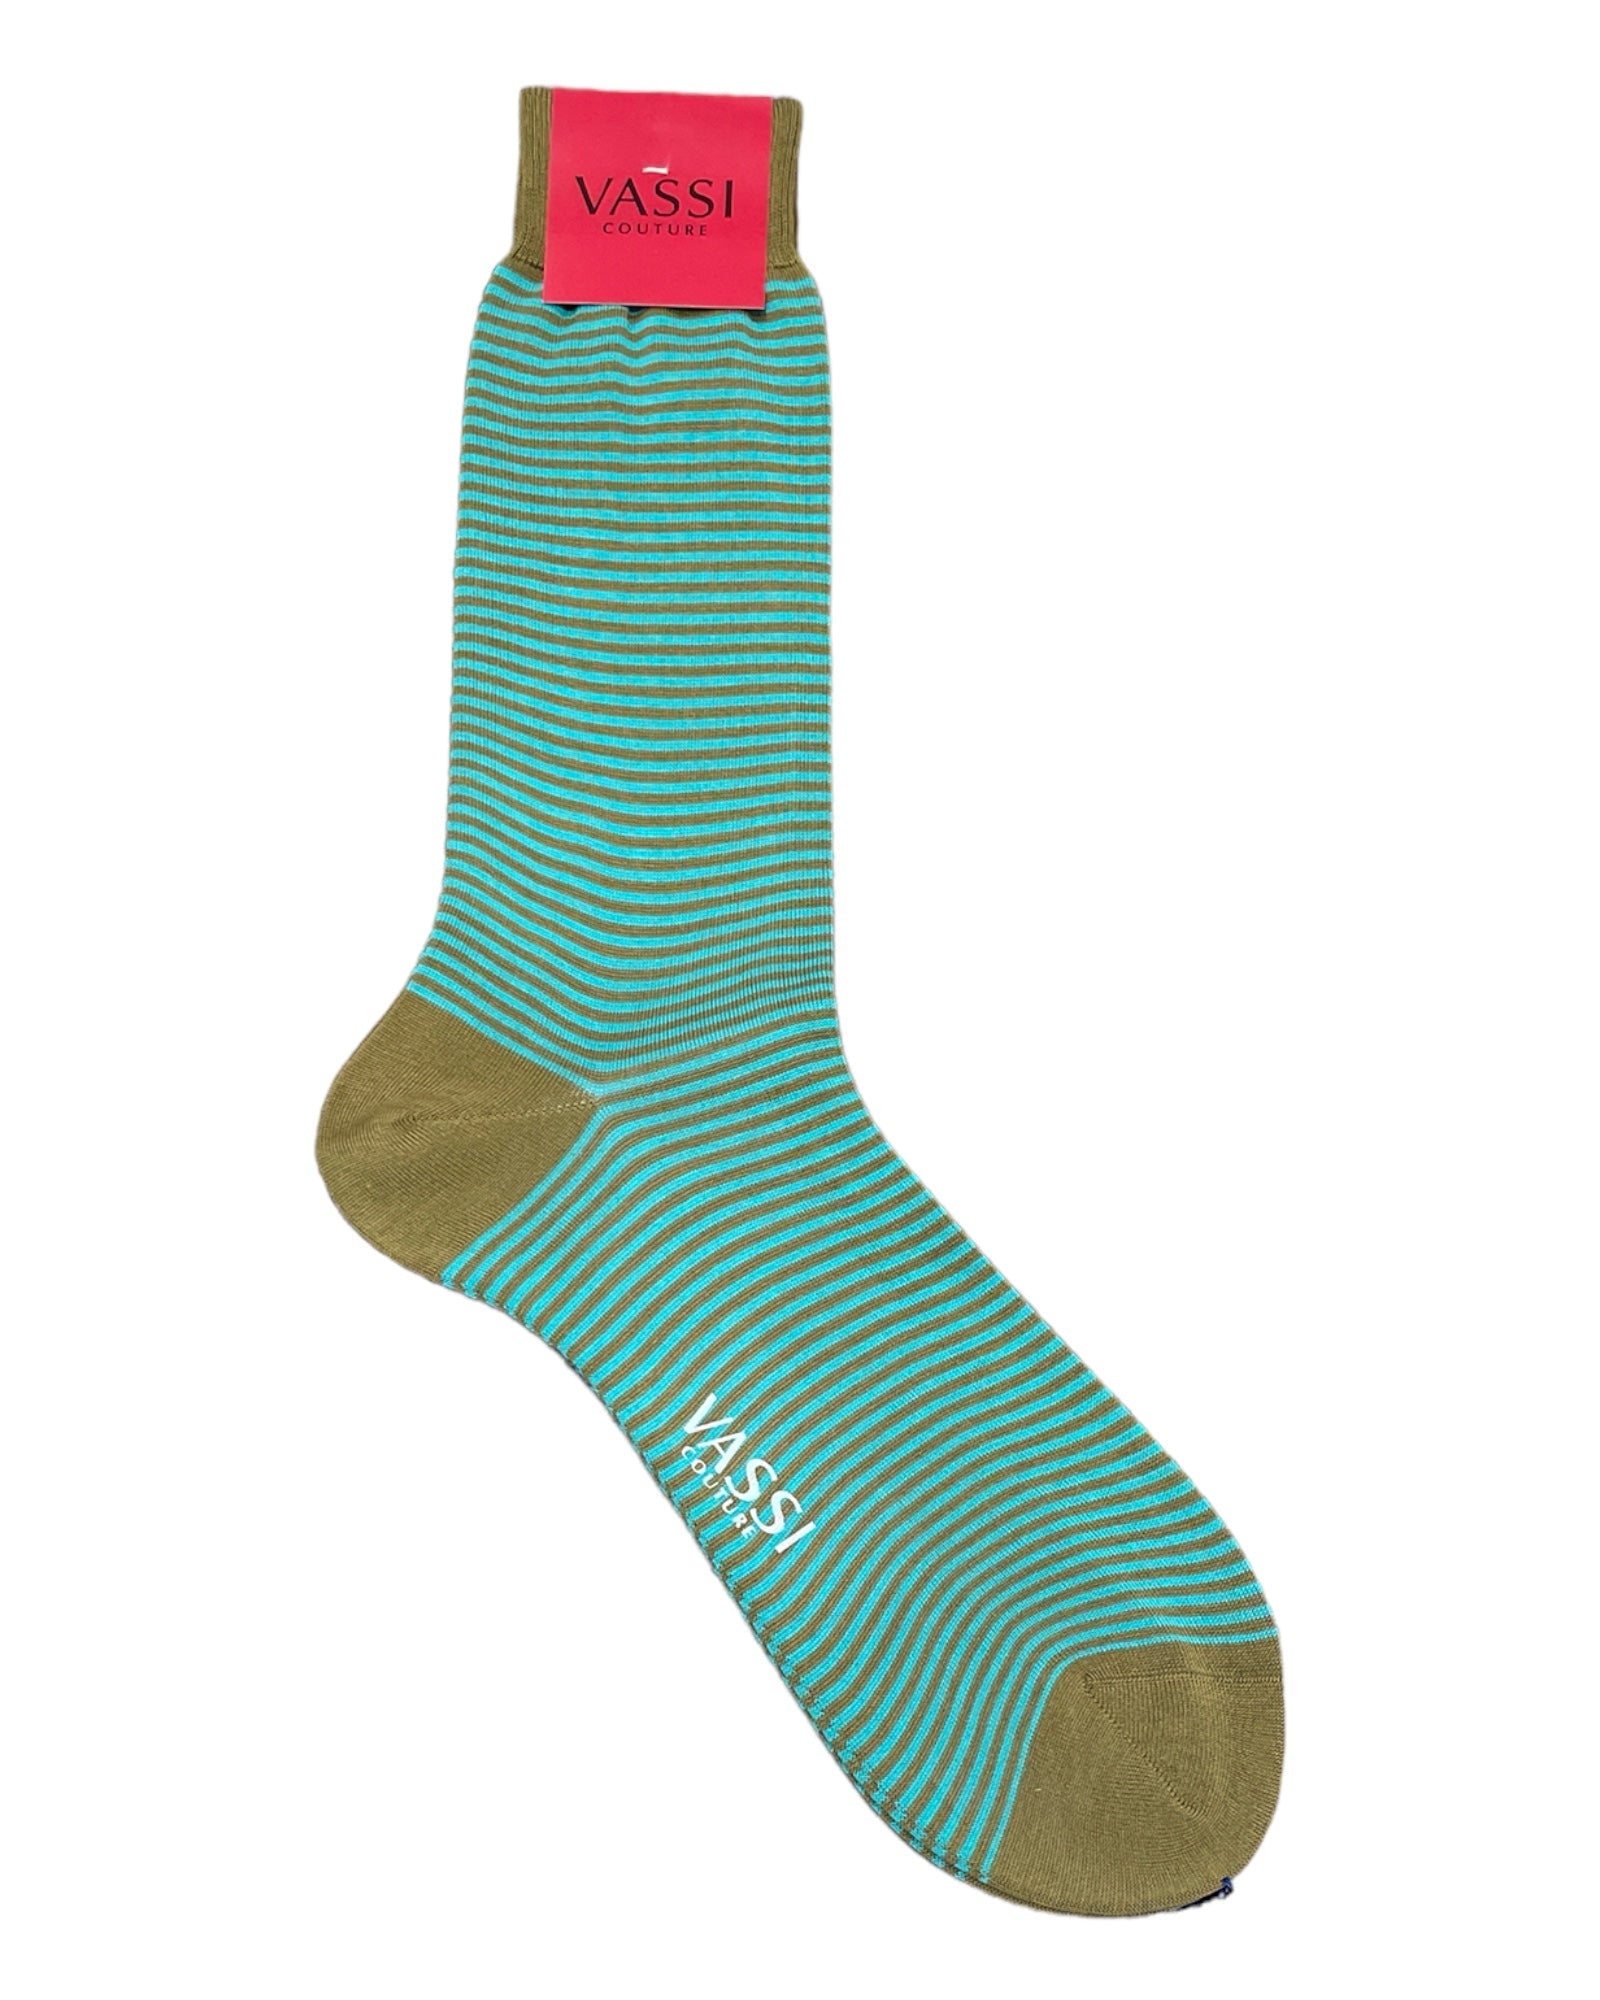 Extra-fine Horizontal Striped Cotton Socks - Olive Socks